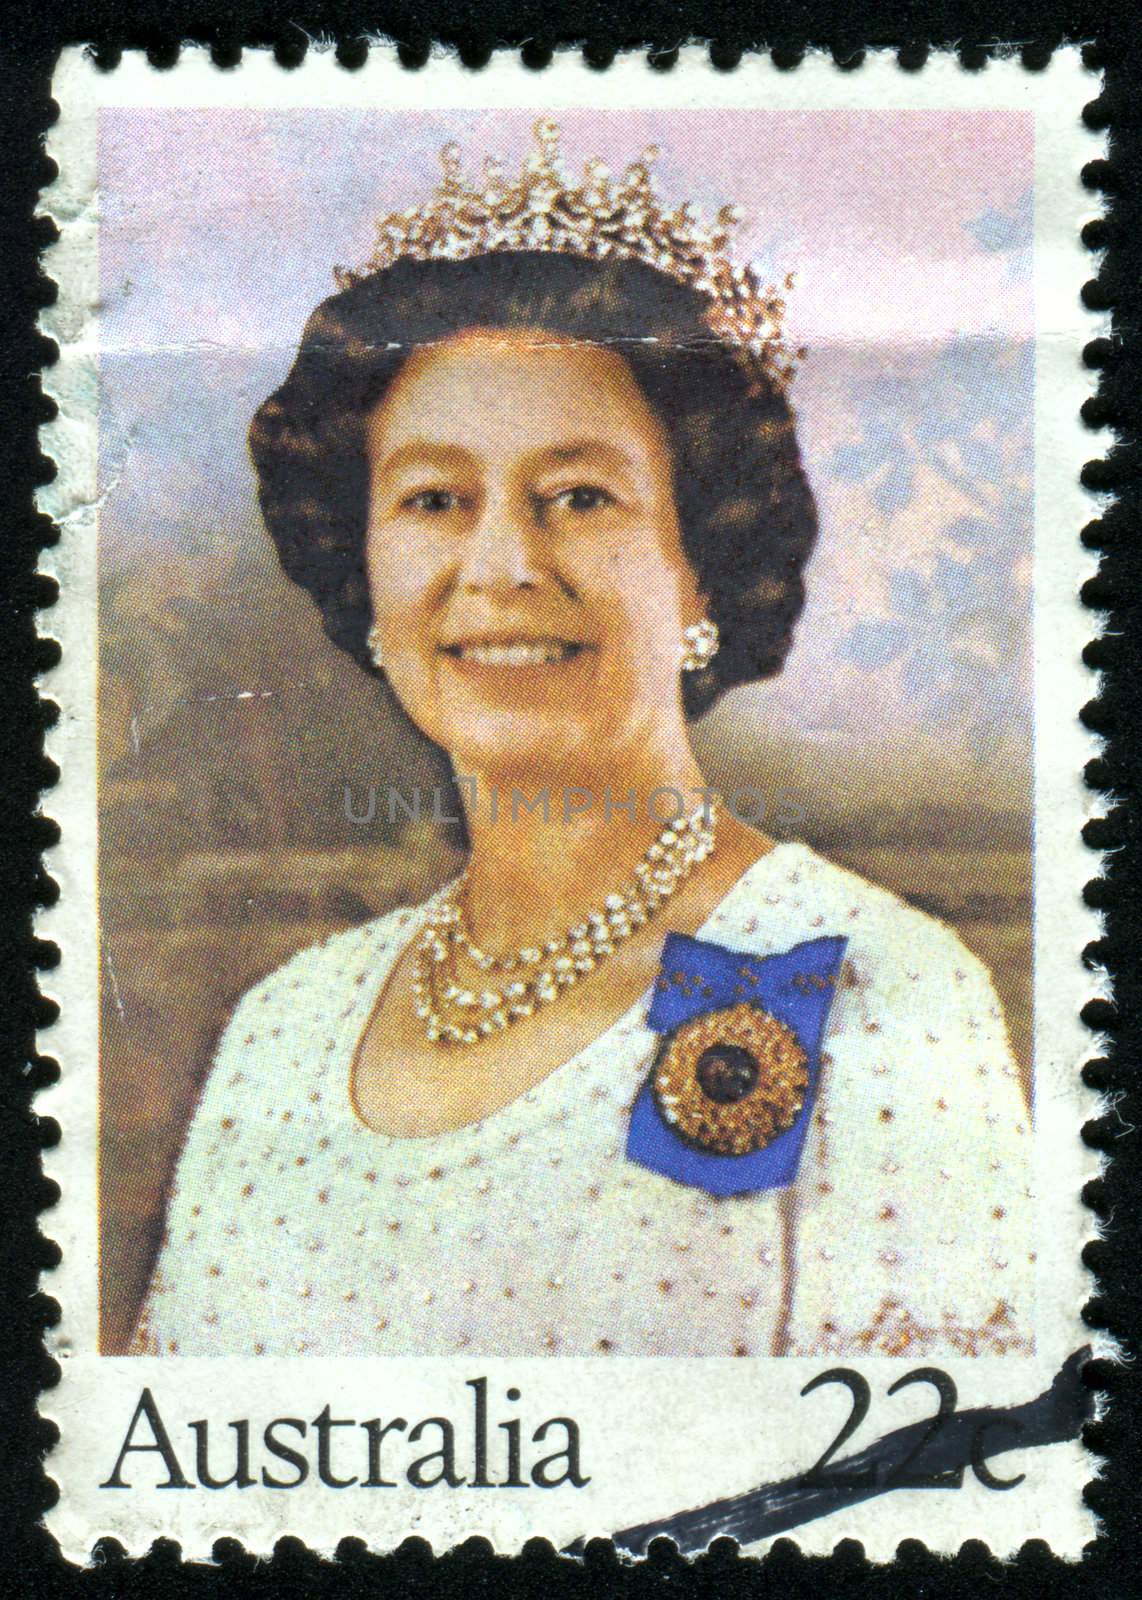 AUSTRALIA - CIRCA 1980: stamp printed by Australia, shows Queen Elizabeth II, circa 1980